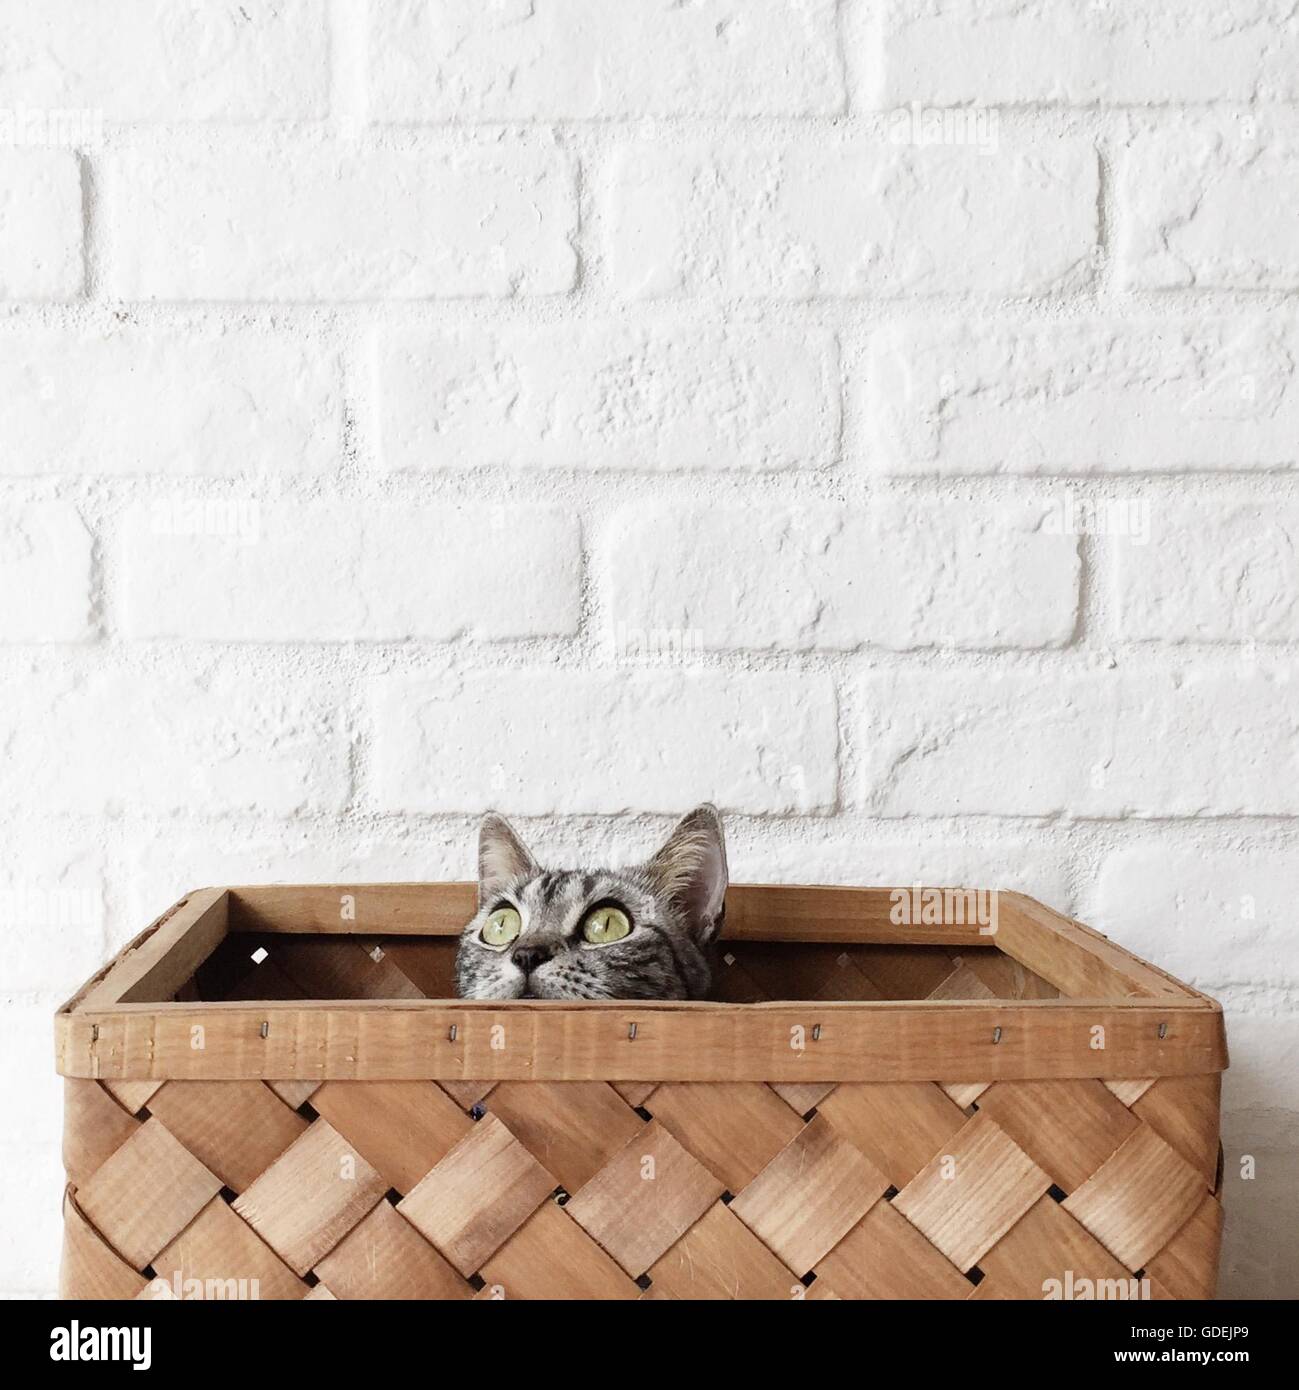 American shorthair cat sitting in basket looking up Stock Photo